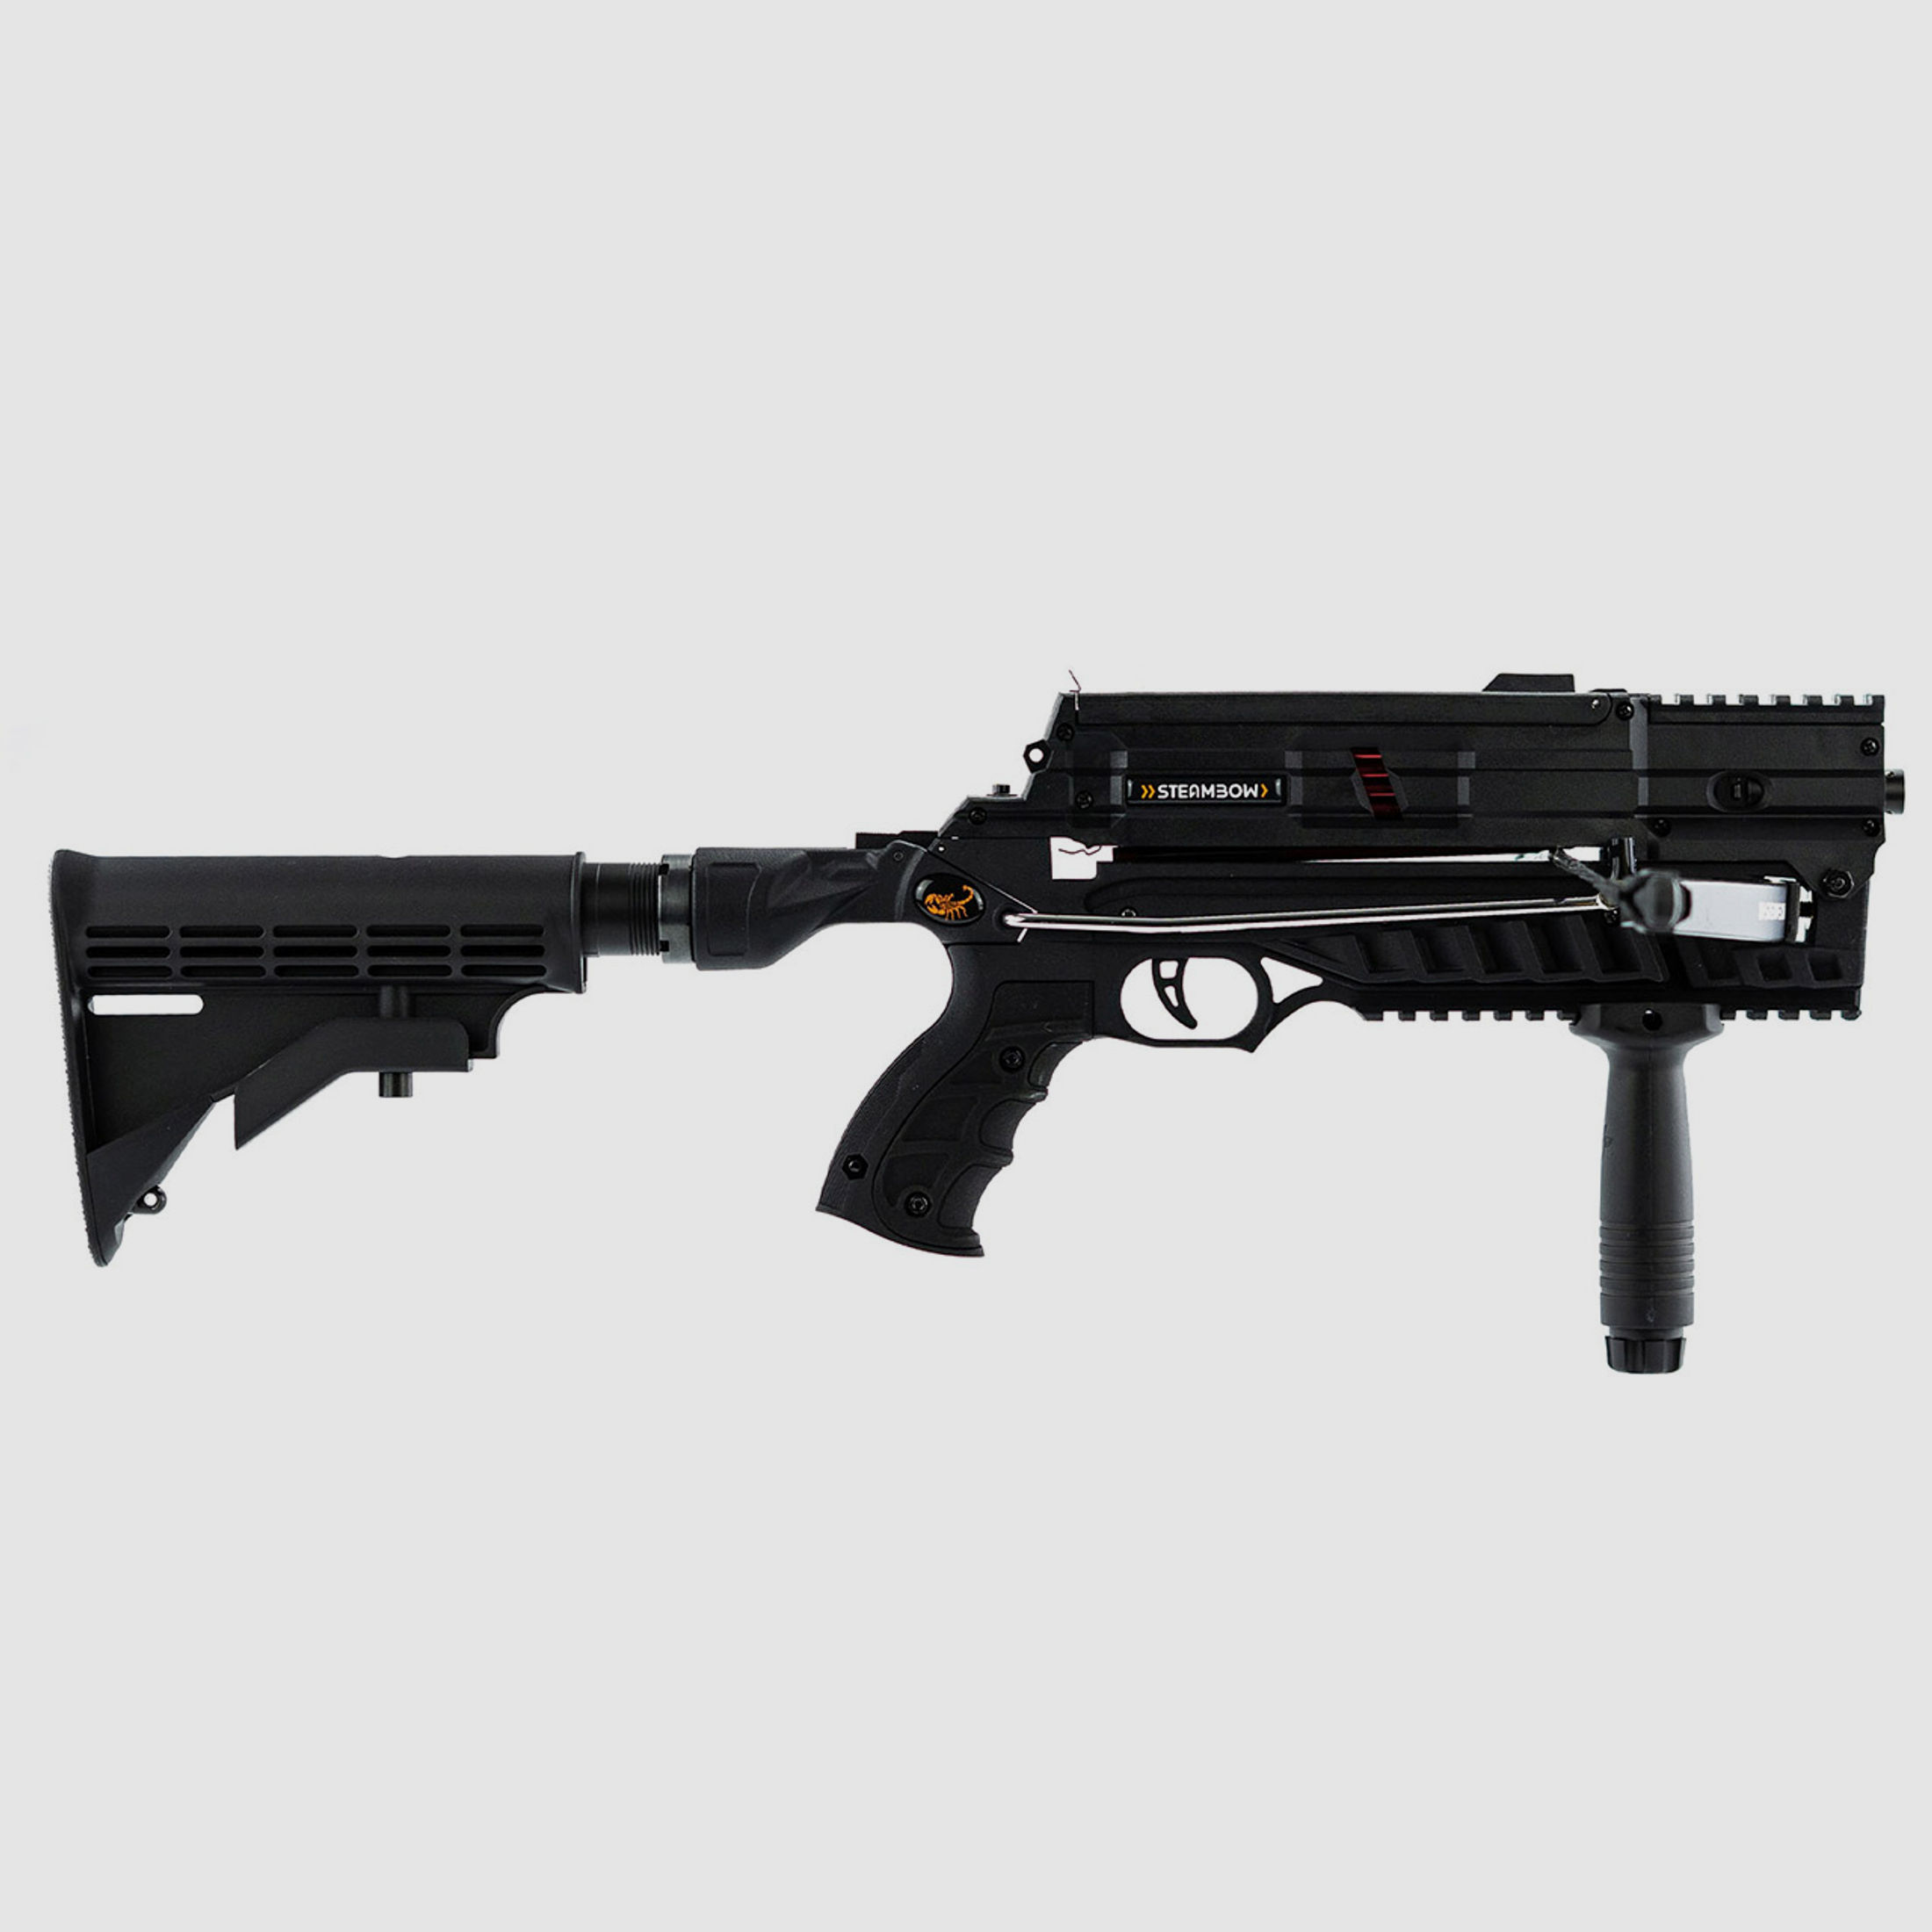 Multishot Pistolenarmbrust Steambow AR-6 Stinger II Tactical 55 lbs 6 Schuss Magazin (P18)